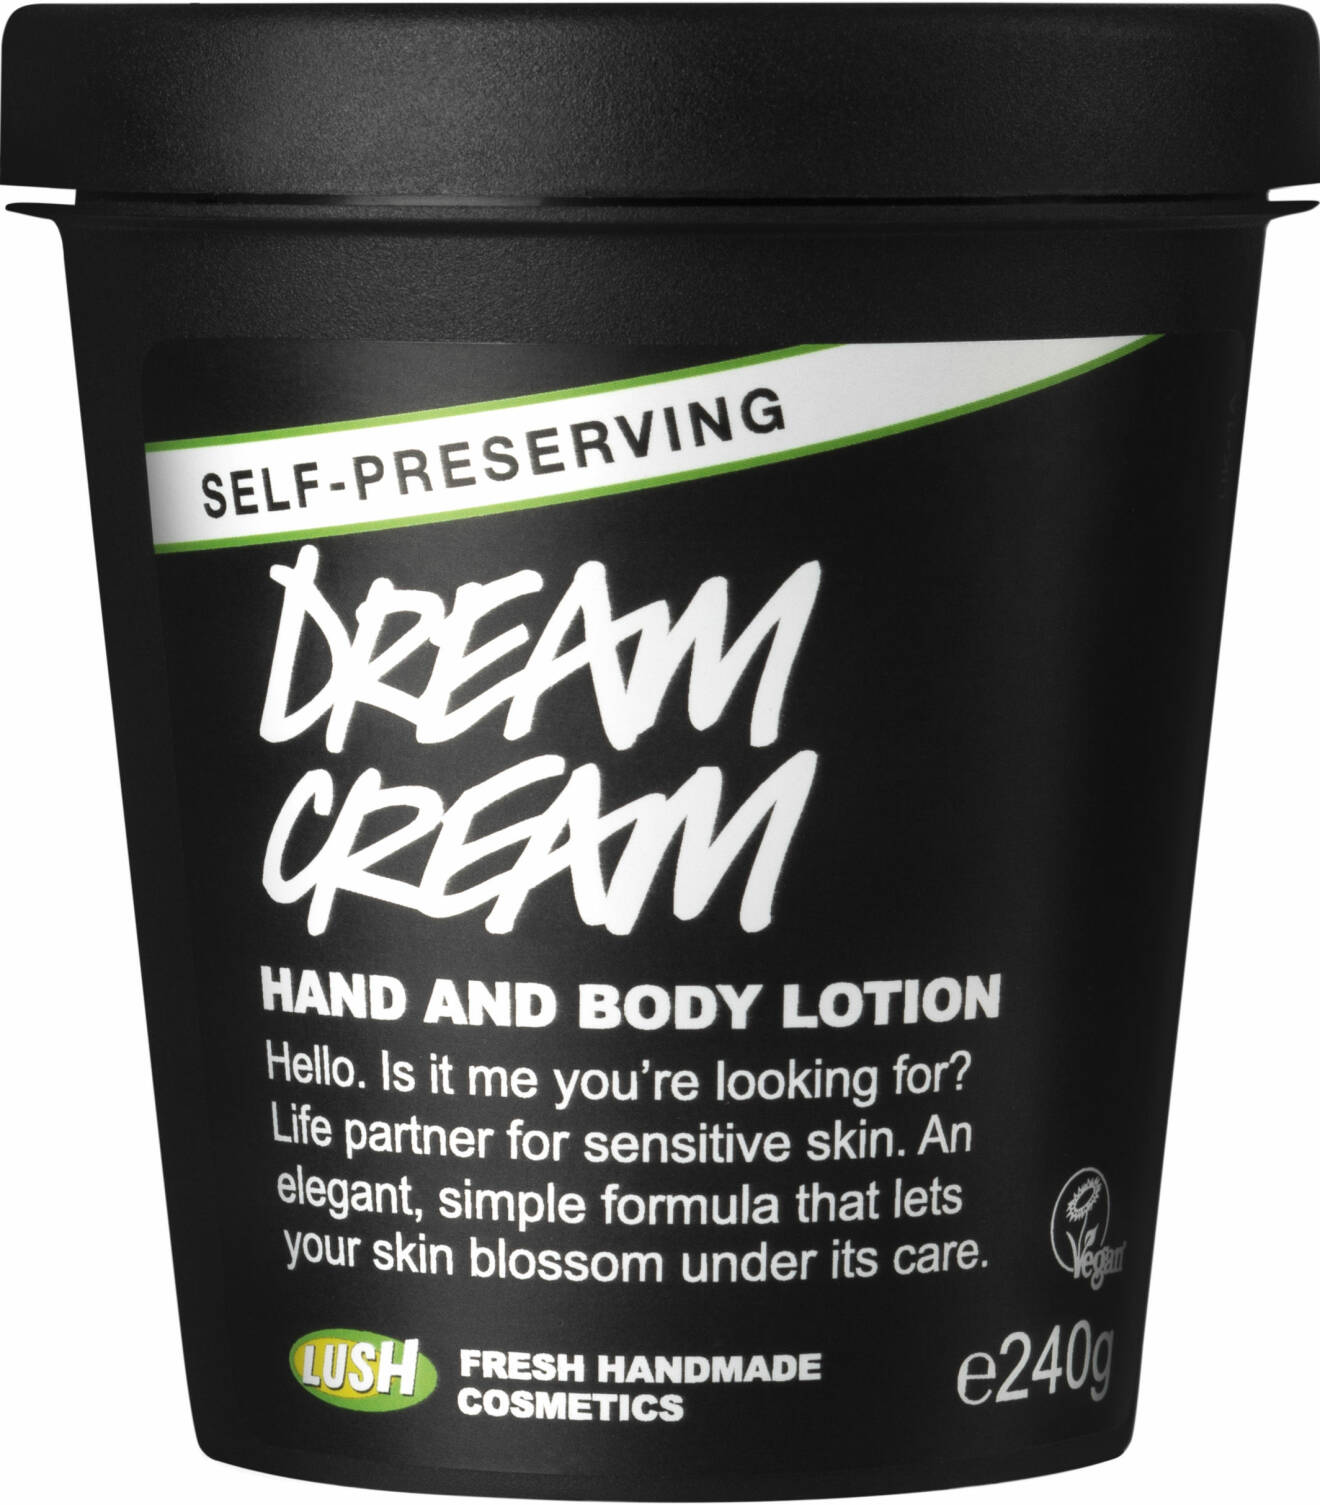 lusch dream cream